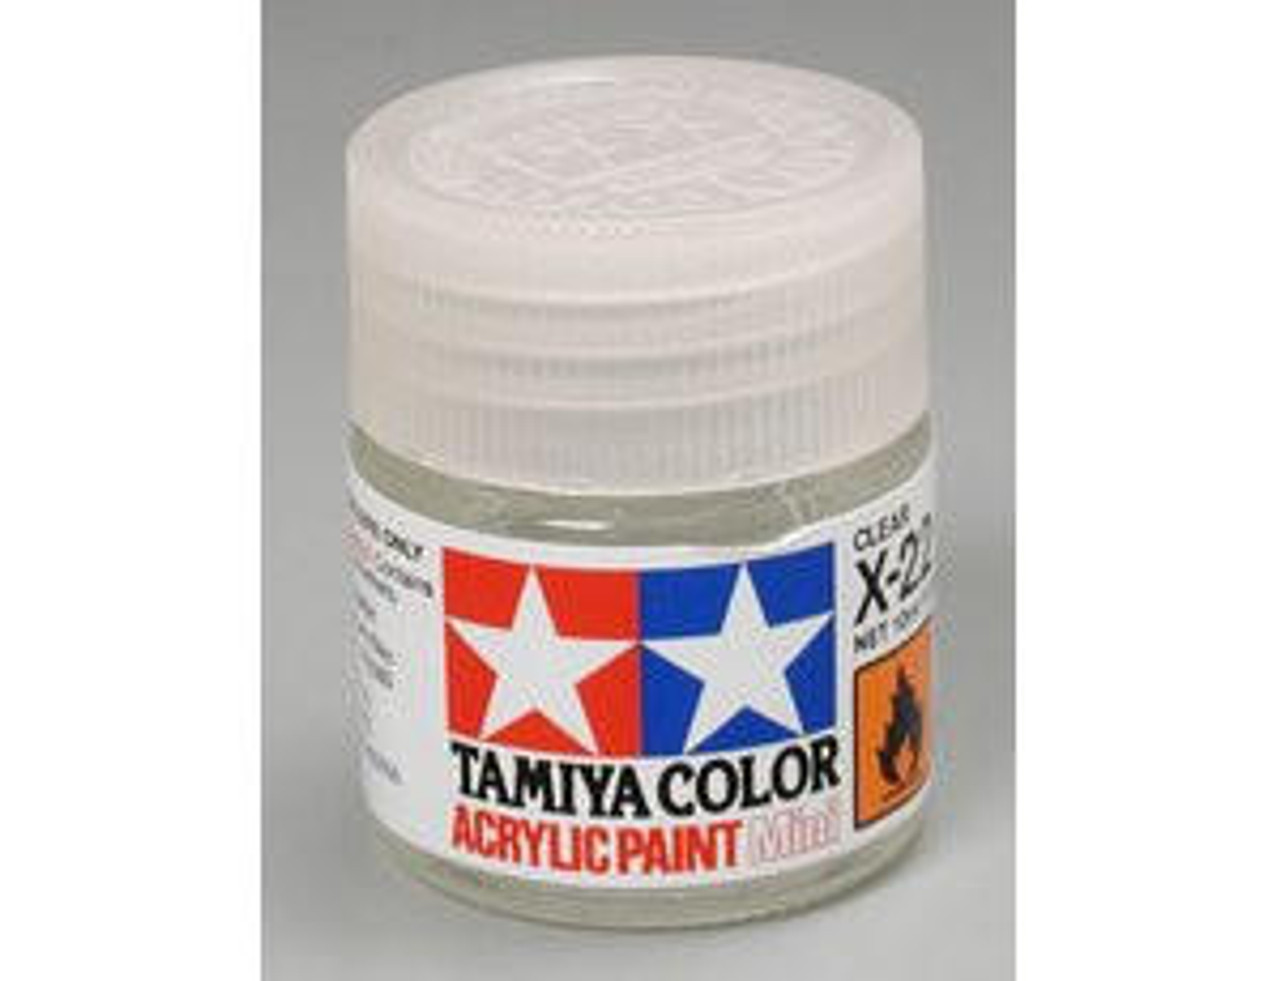 Tamiya Color - Acrylic Paint question